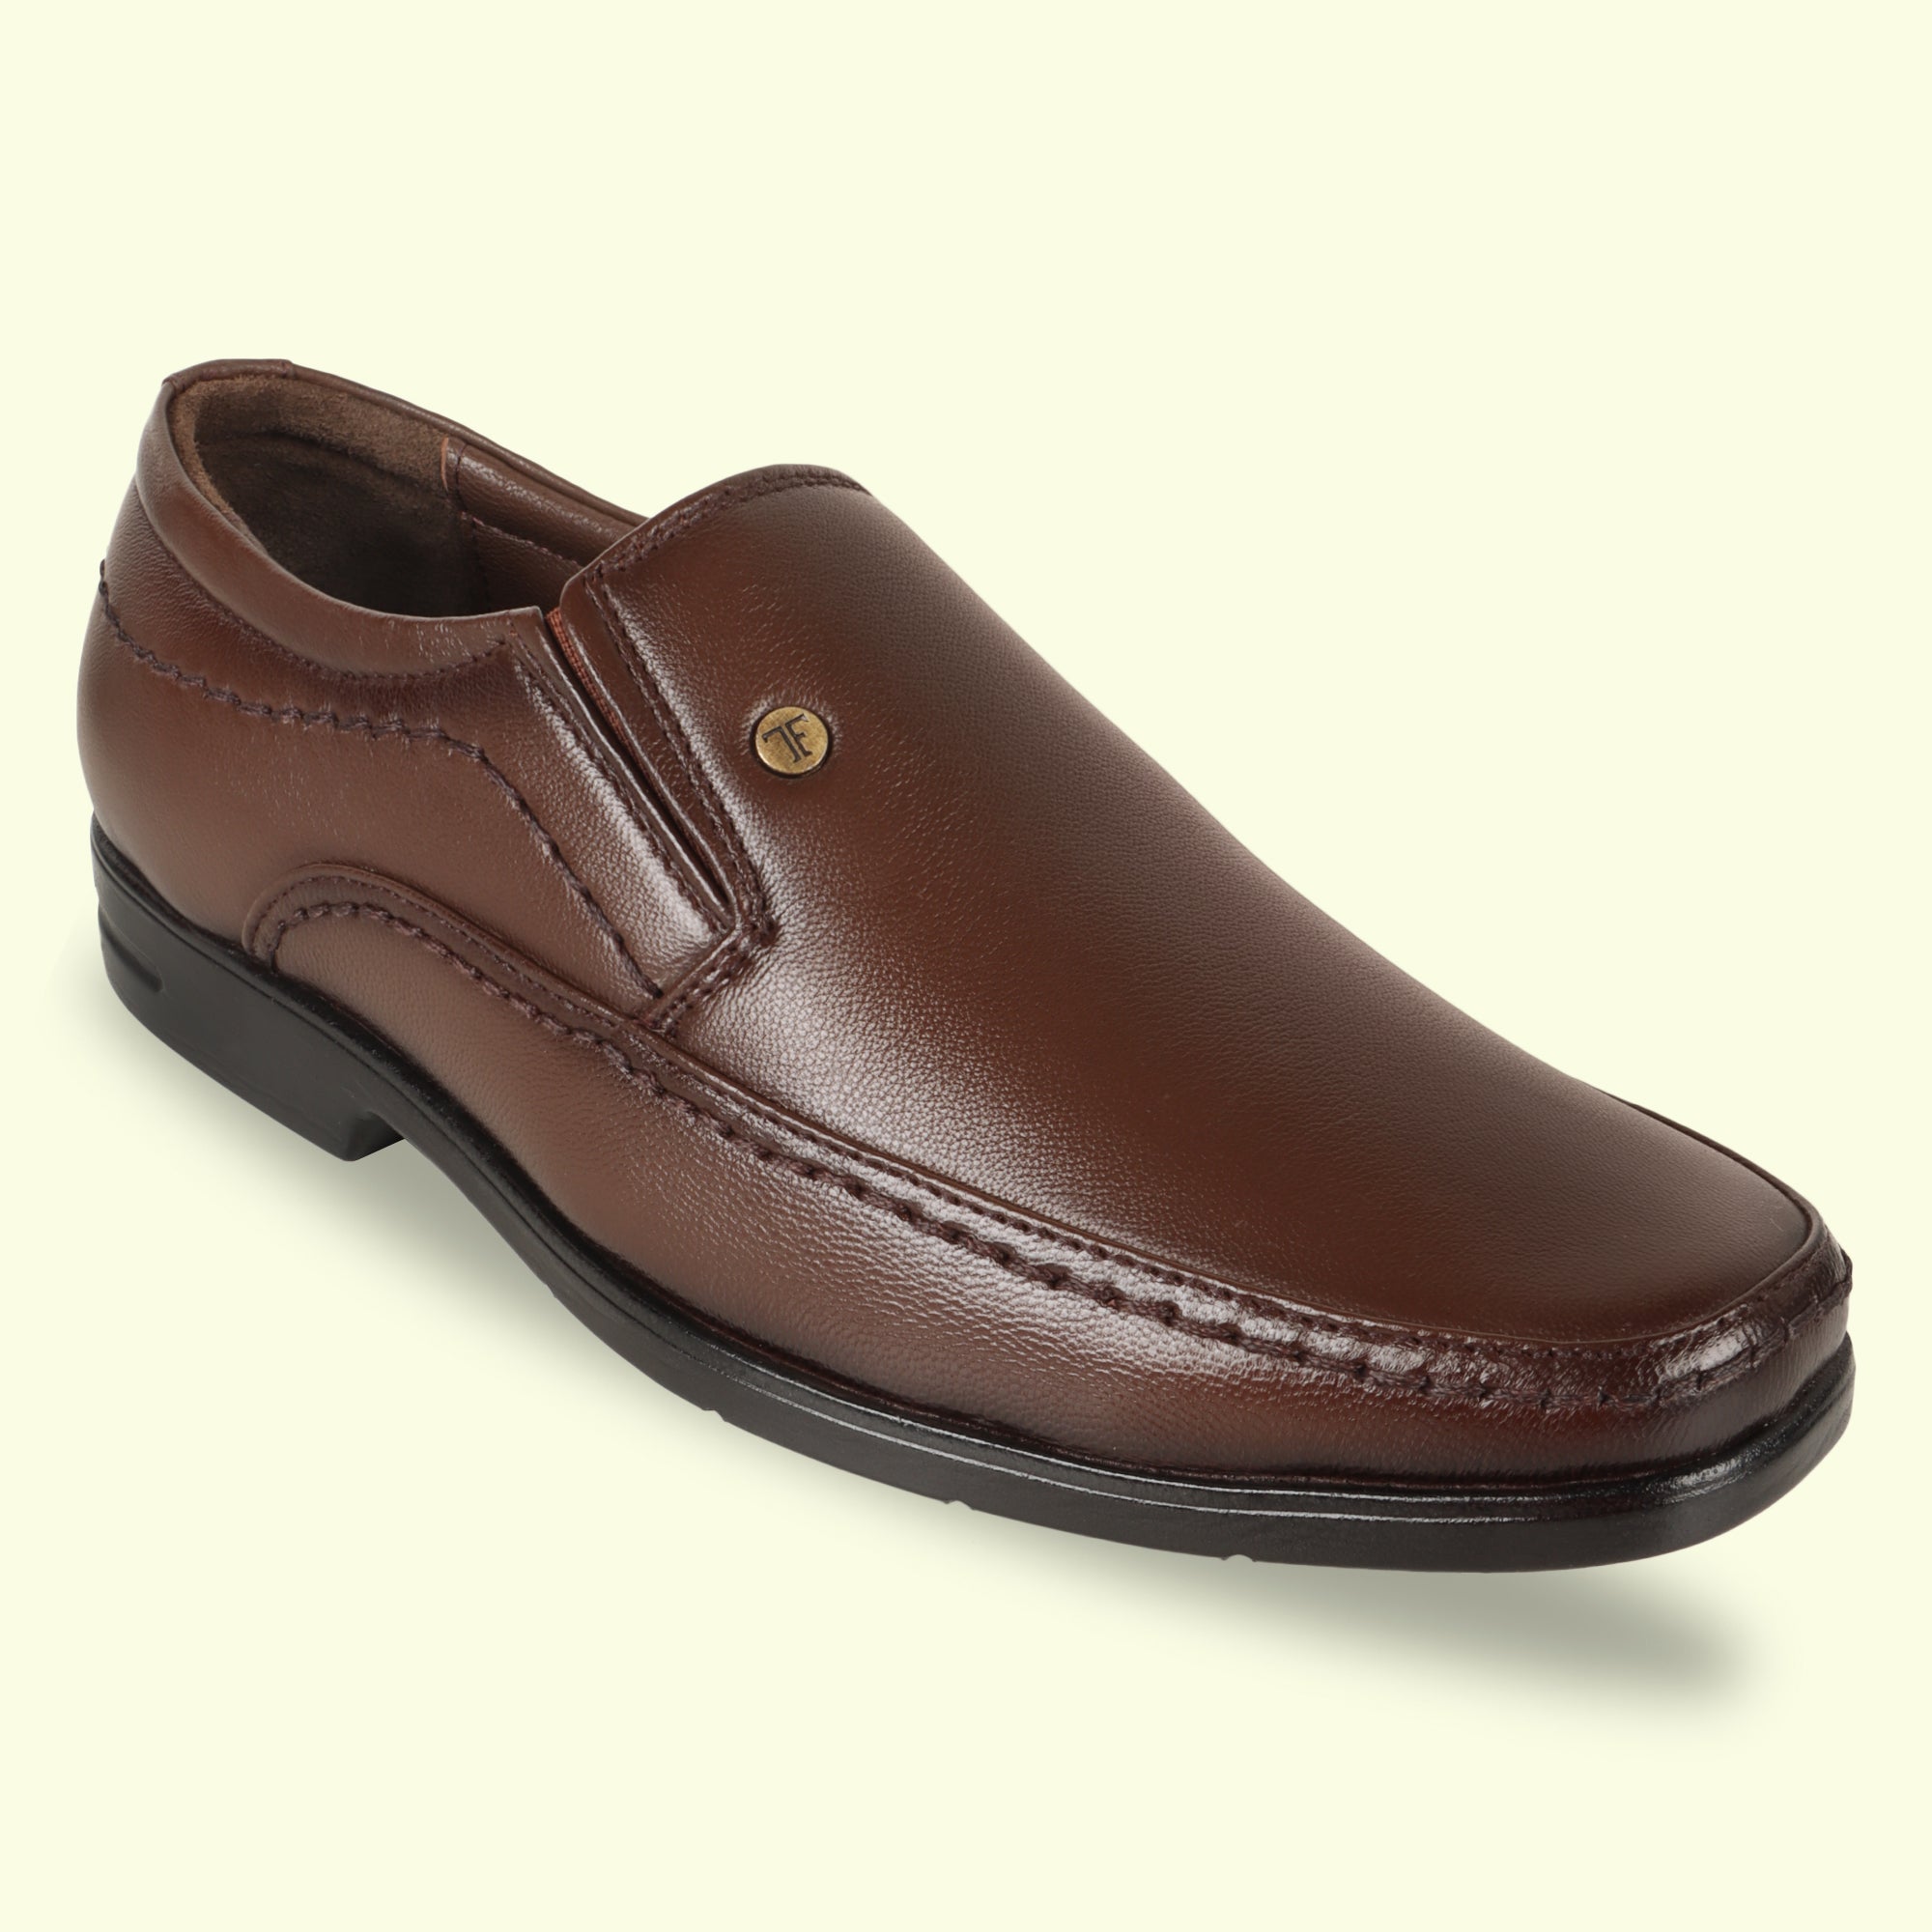 TRUDGE Brown shoe For Men - 5038